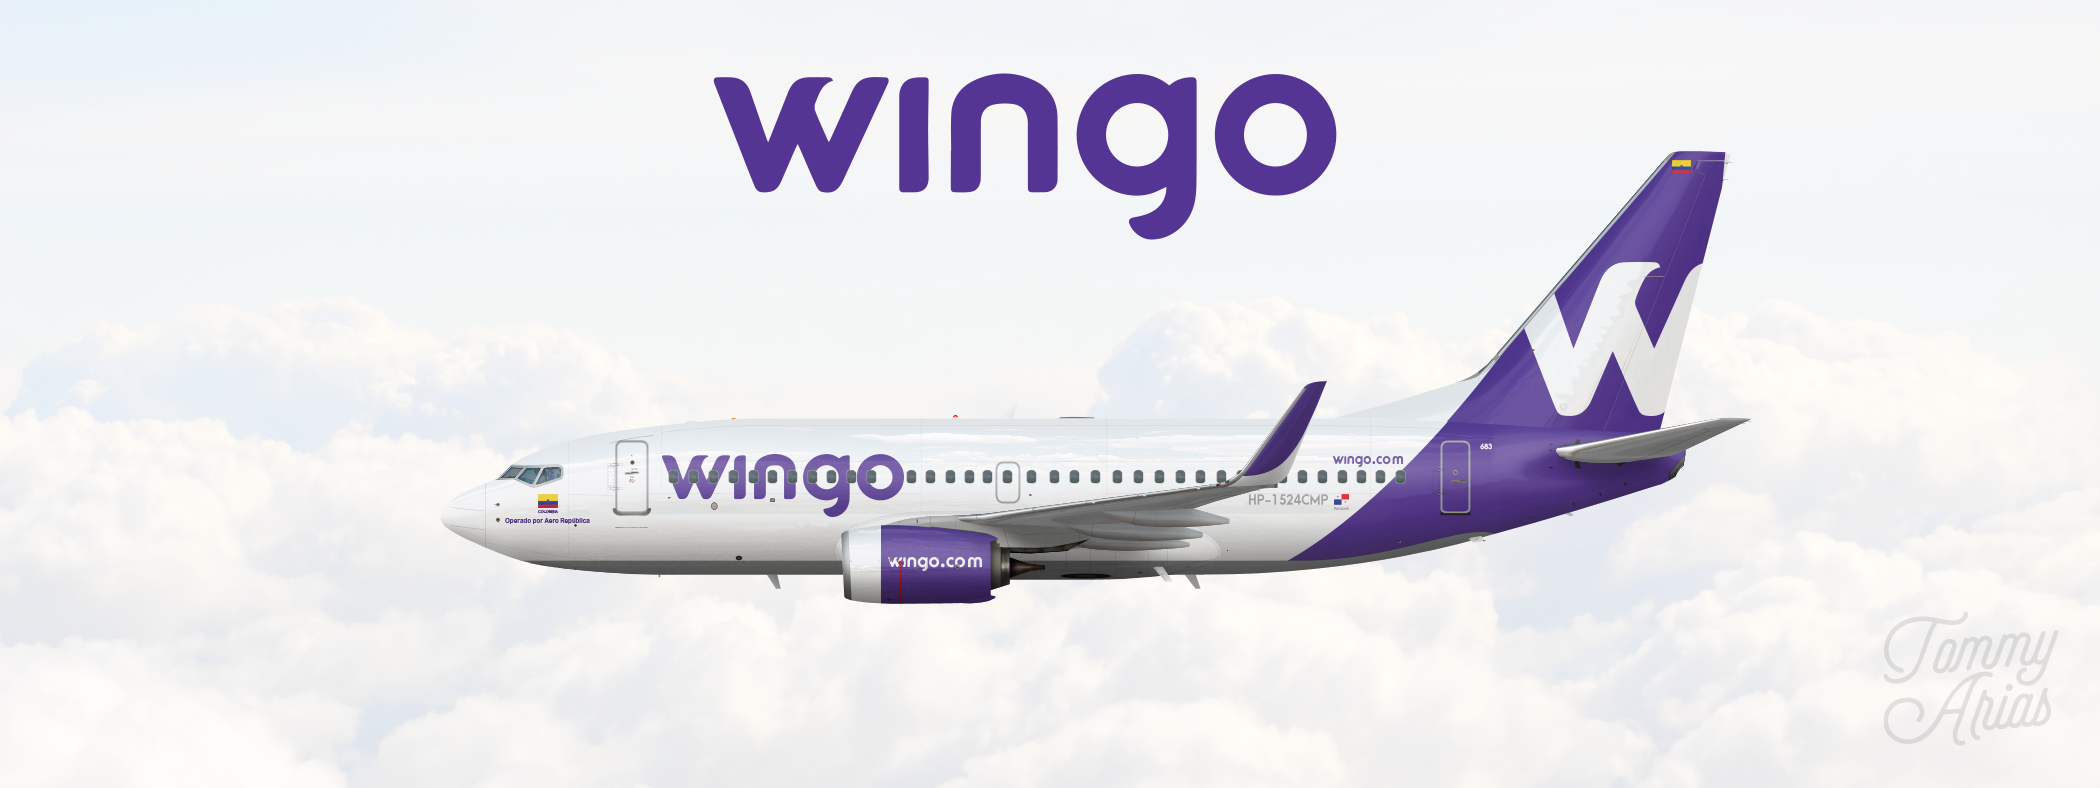 Wingo / Boeing 737-700 - Showcase - Gallery - Airline Empires